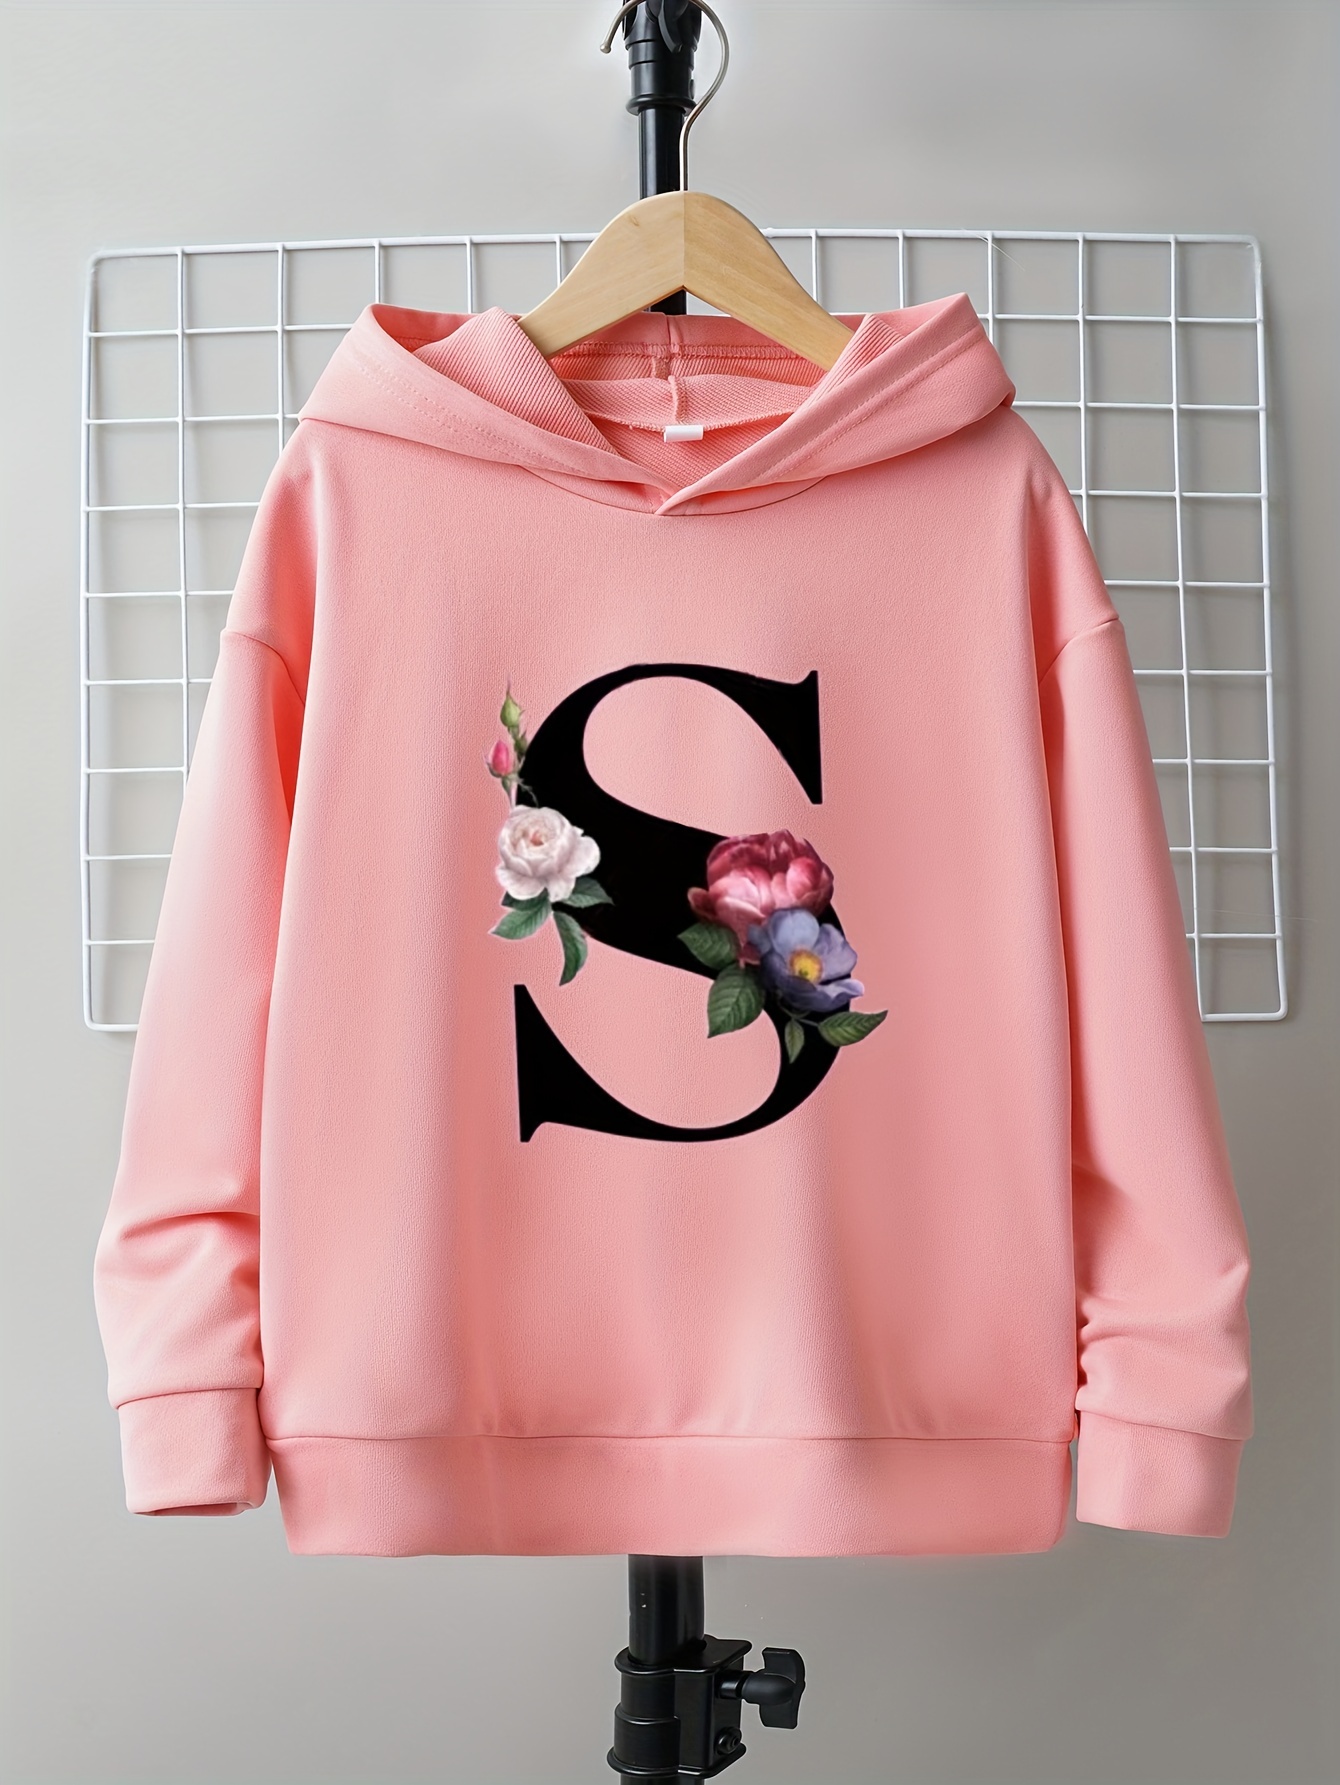 Letter Print Pink Sibling Matching Long-sleeve Hooded Sweatshirts Sets